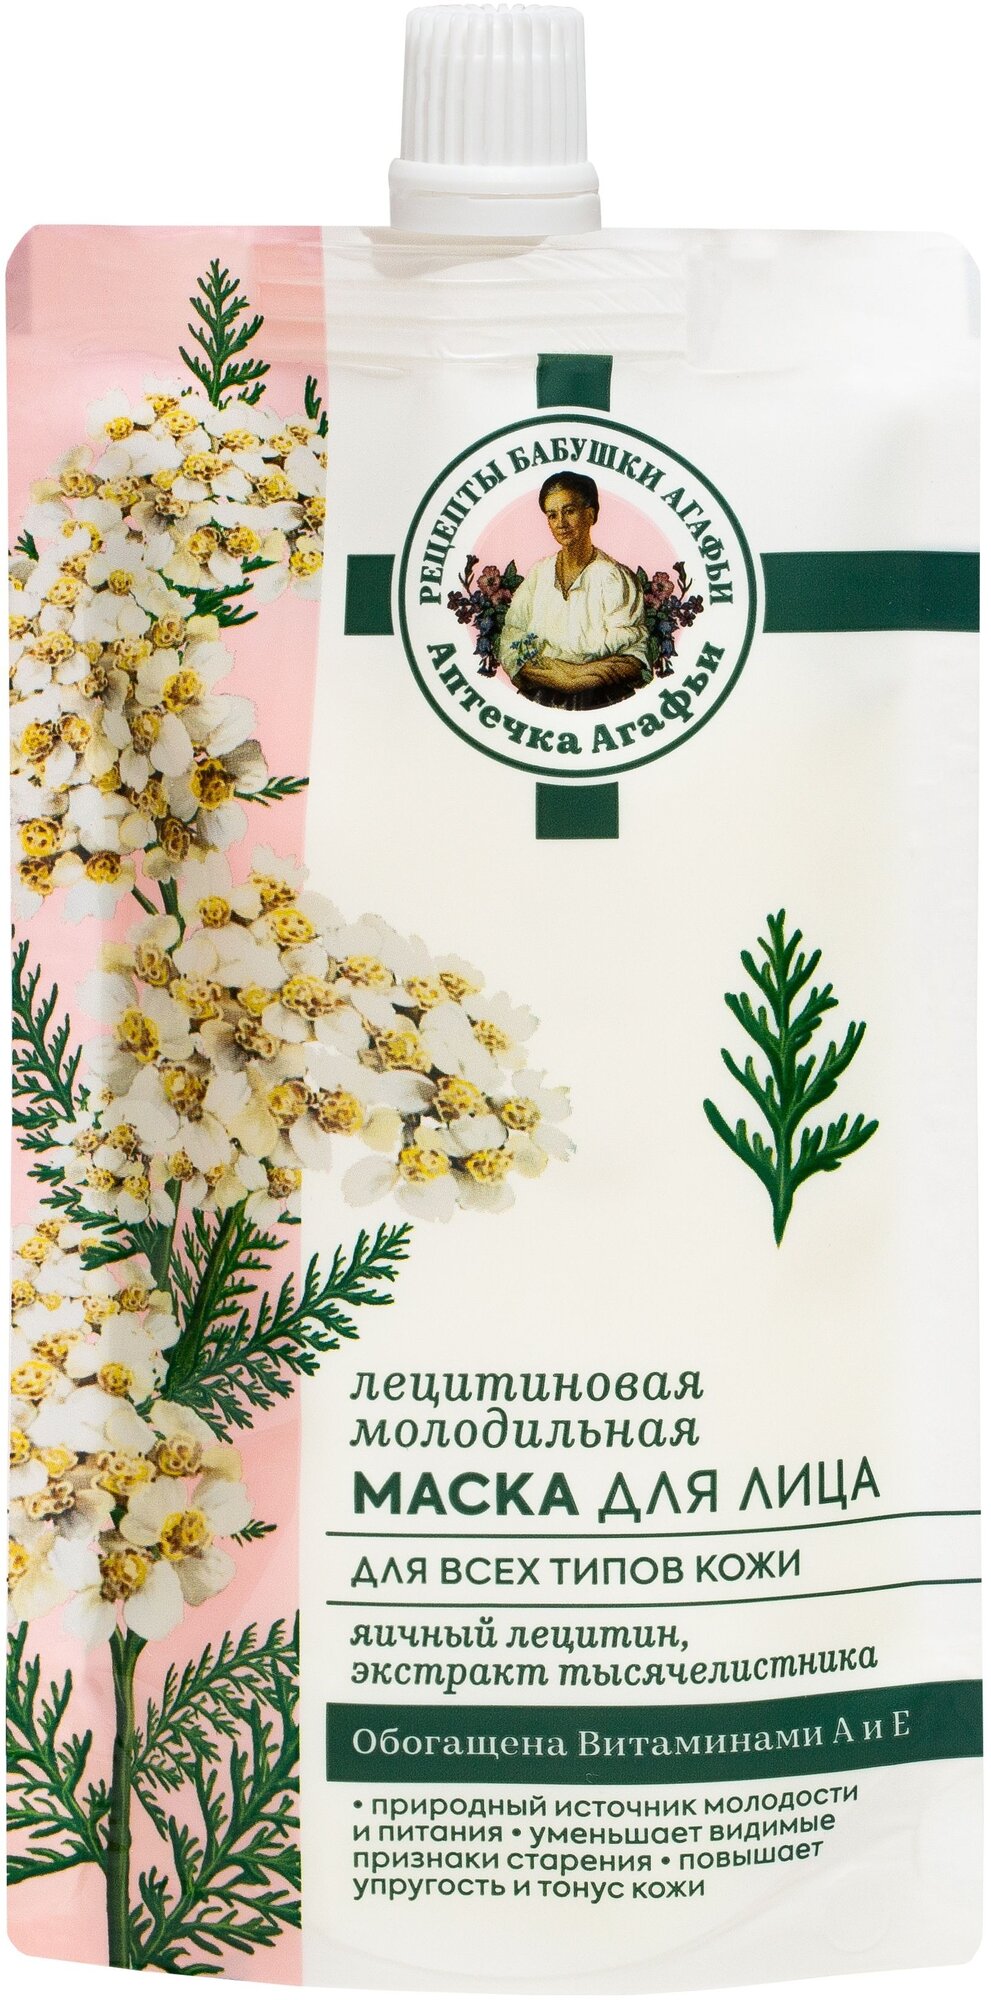 Рецепты бабушки Агафьи Маска для лица Аптечка Агафьи Молодильная, 100 мл